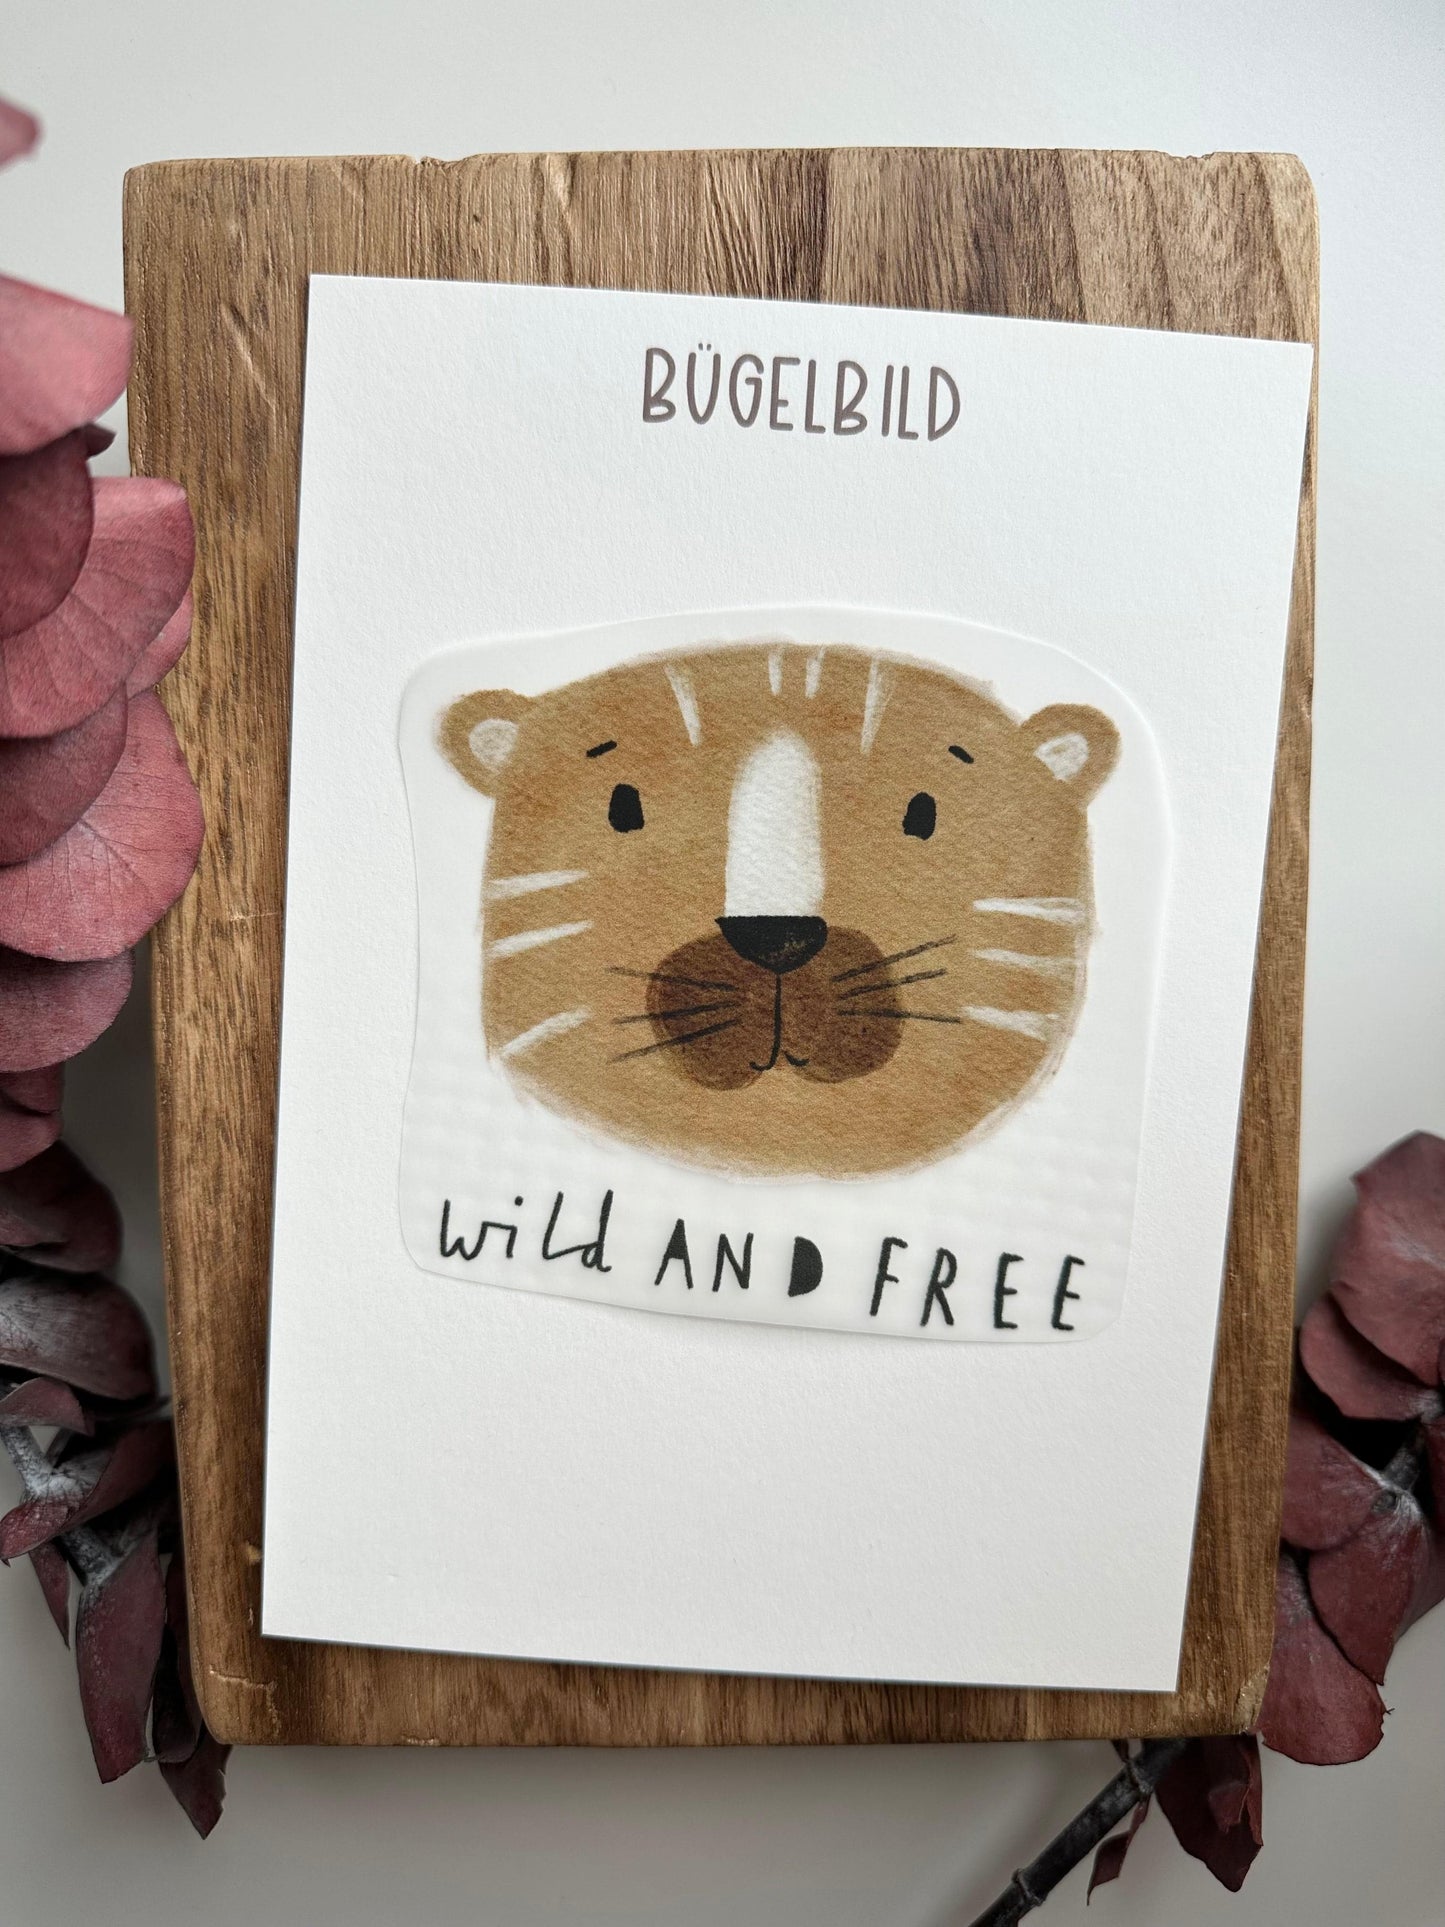 Bügelbild Wild and free